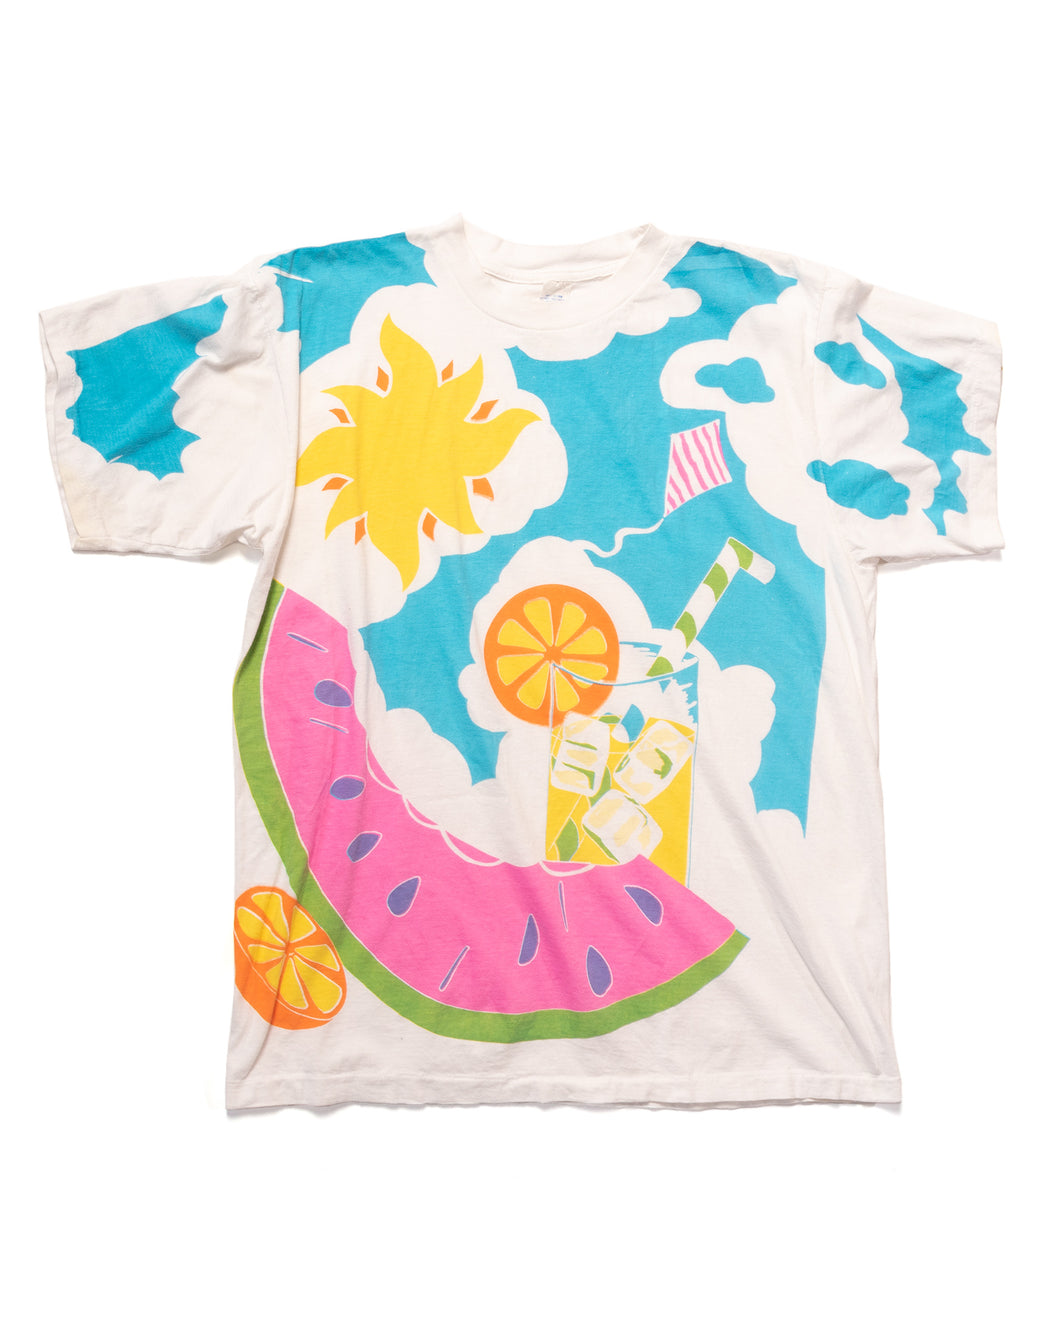 Handmade Silkscreen T-Shirt with Lemonade Watermelon and Kite